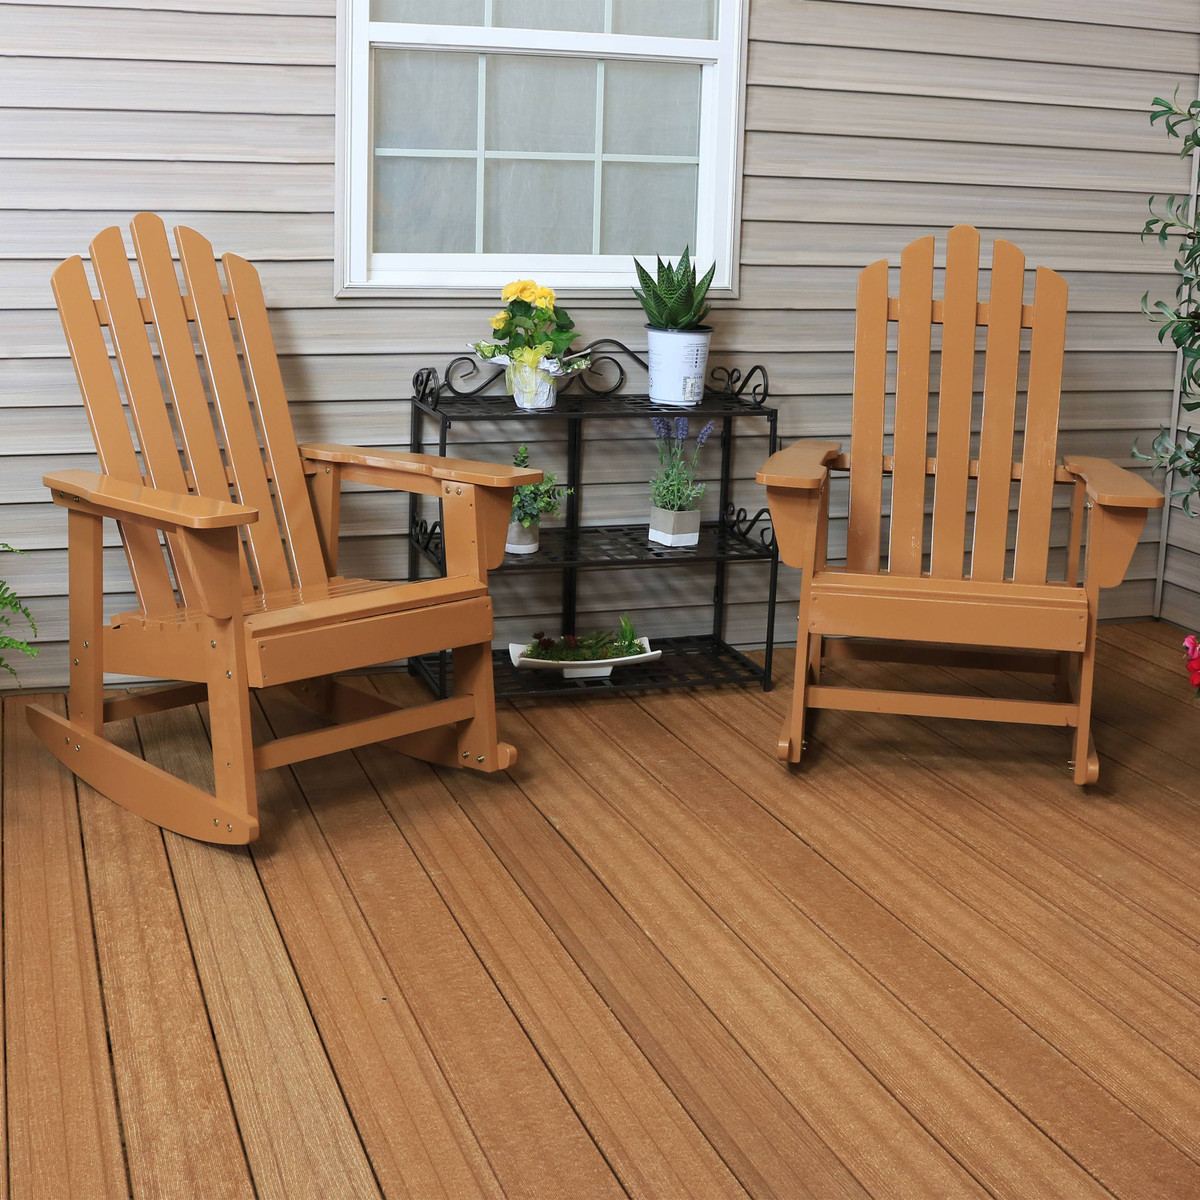 sunnydaze outdoor wooden adirondack rocking chair with cedar